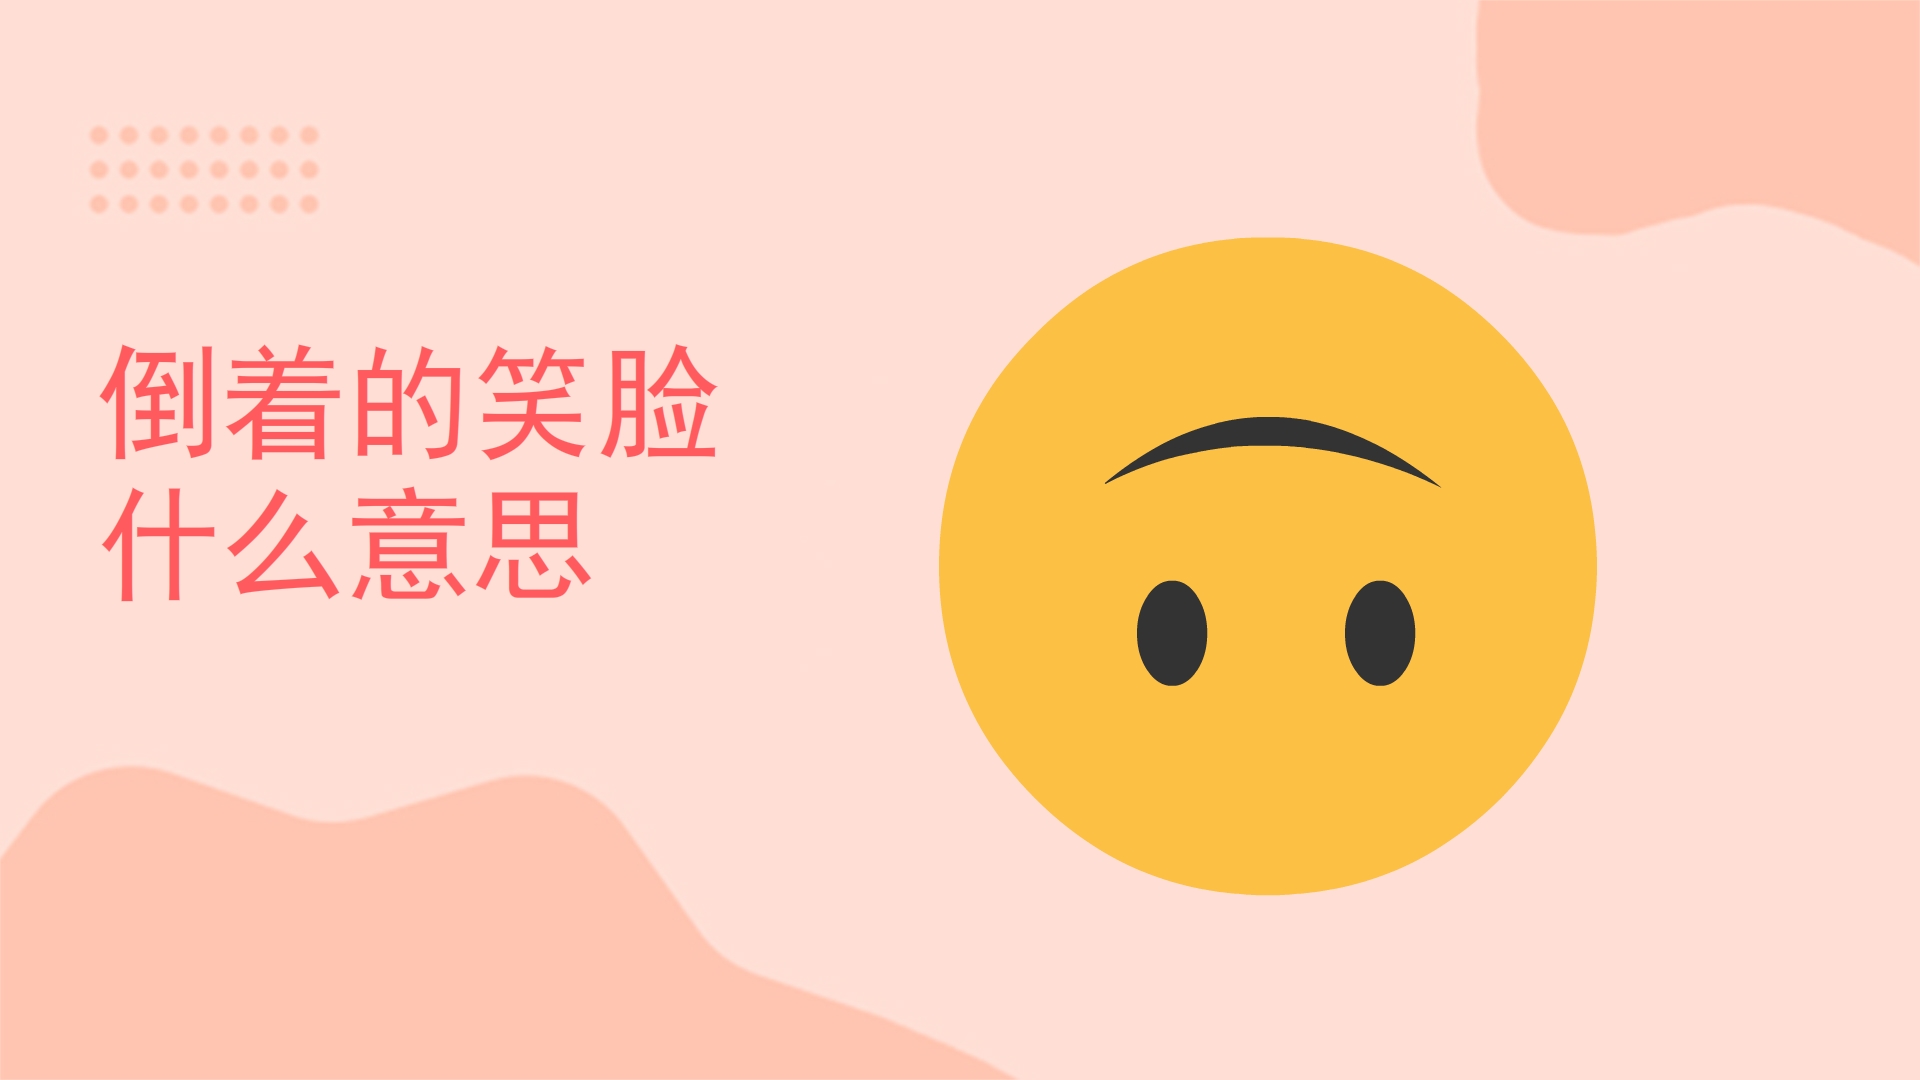 Emoji表情中 倒着的微笑表情是什么意思？ - 知乎